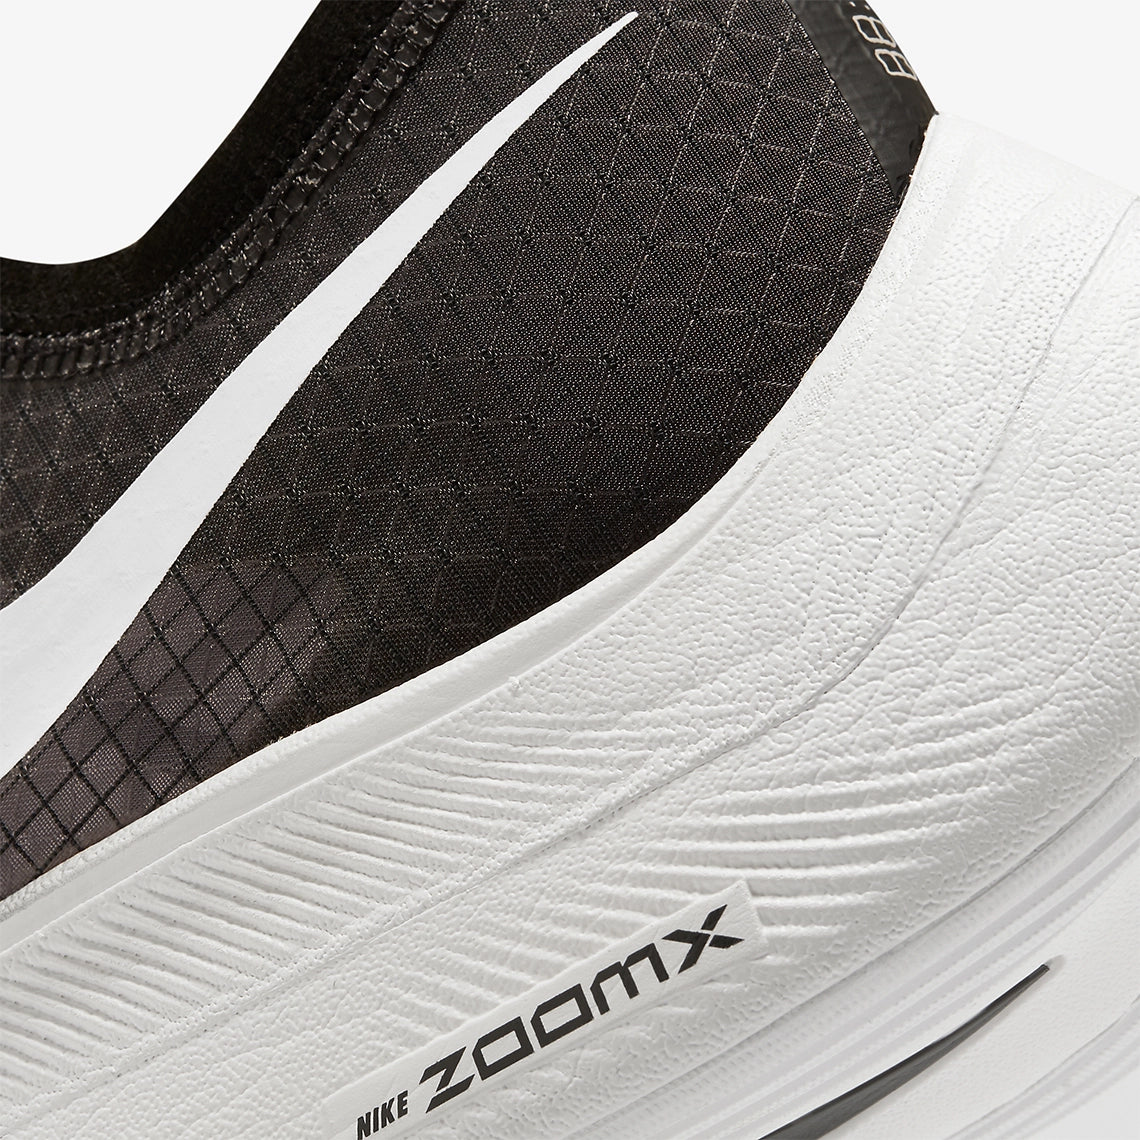 AO4568-001 Nike ZoomX Vaporfly NEXT% Black